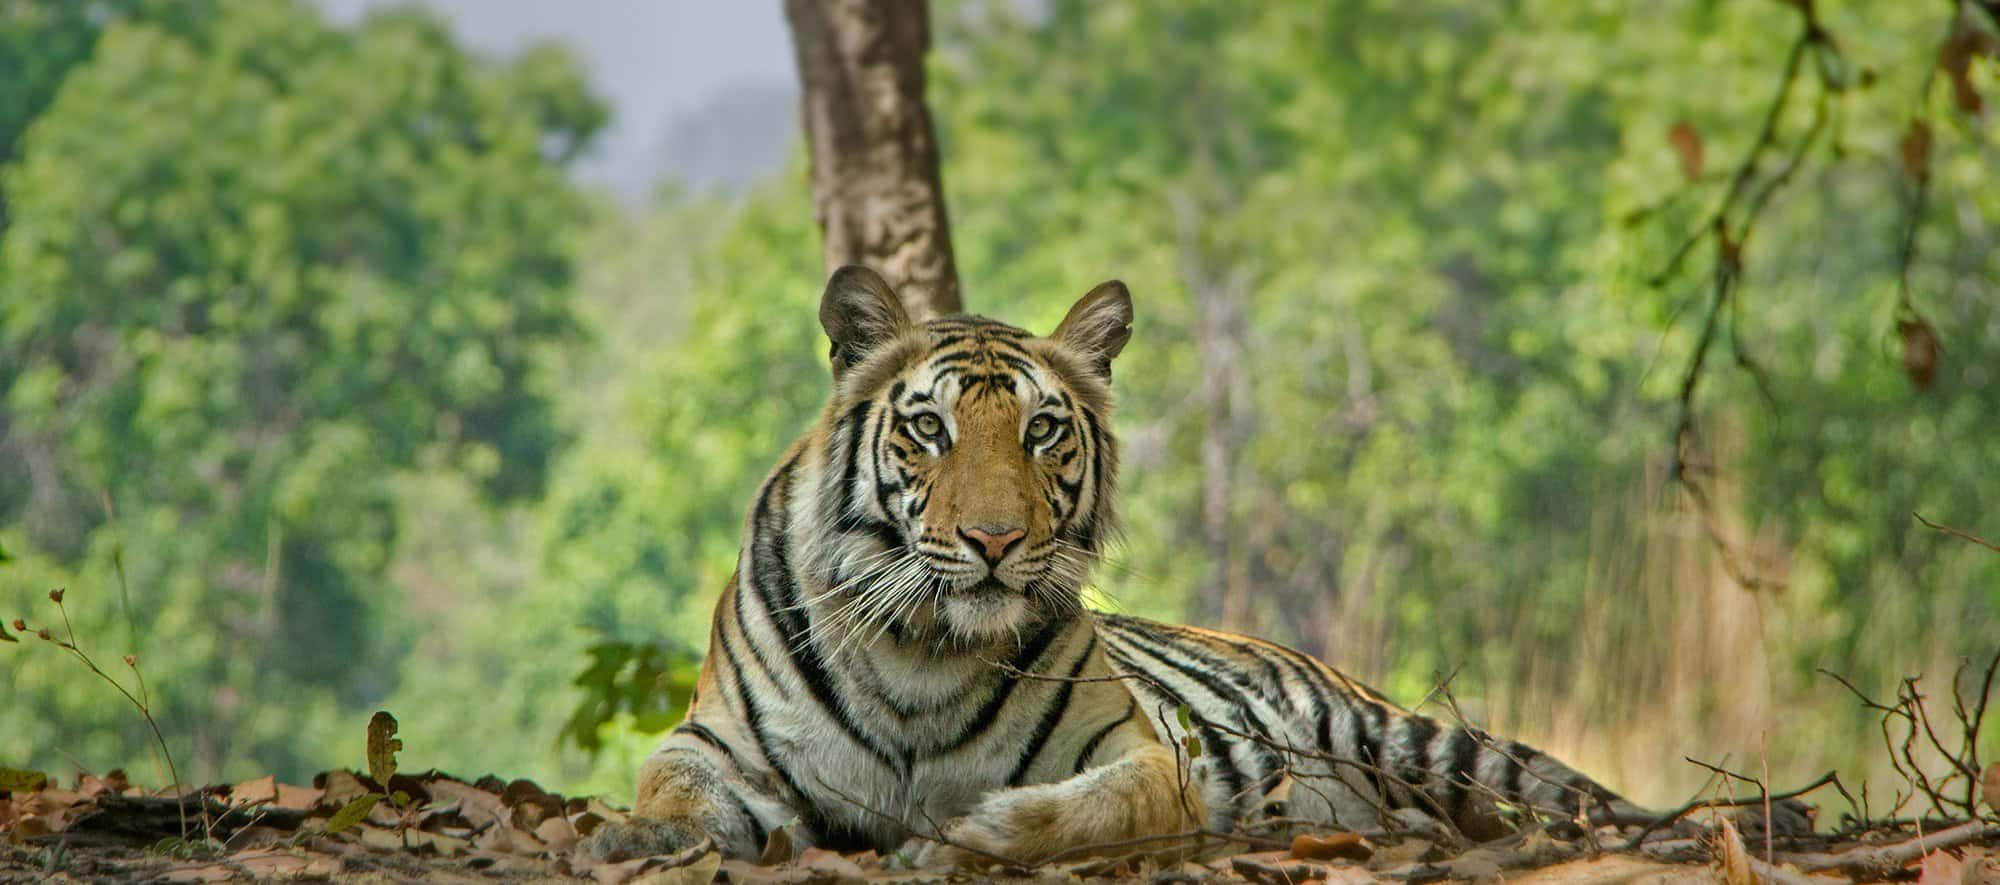 Discover Kanha National Park Resort from Tiger Safari Bandhavgarh